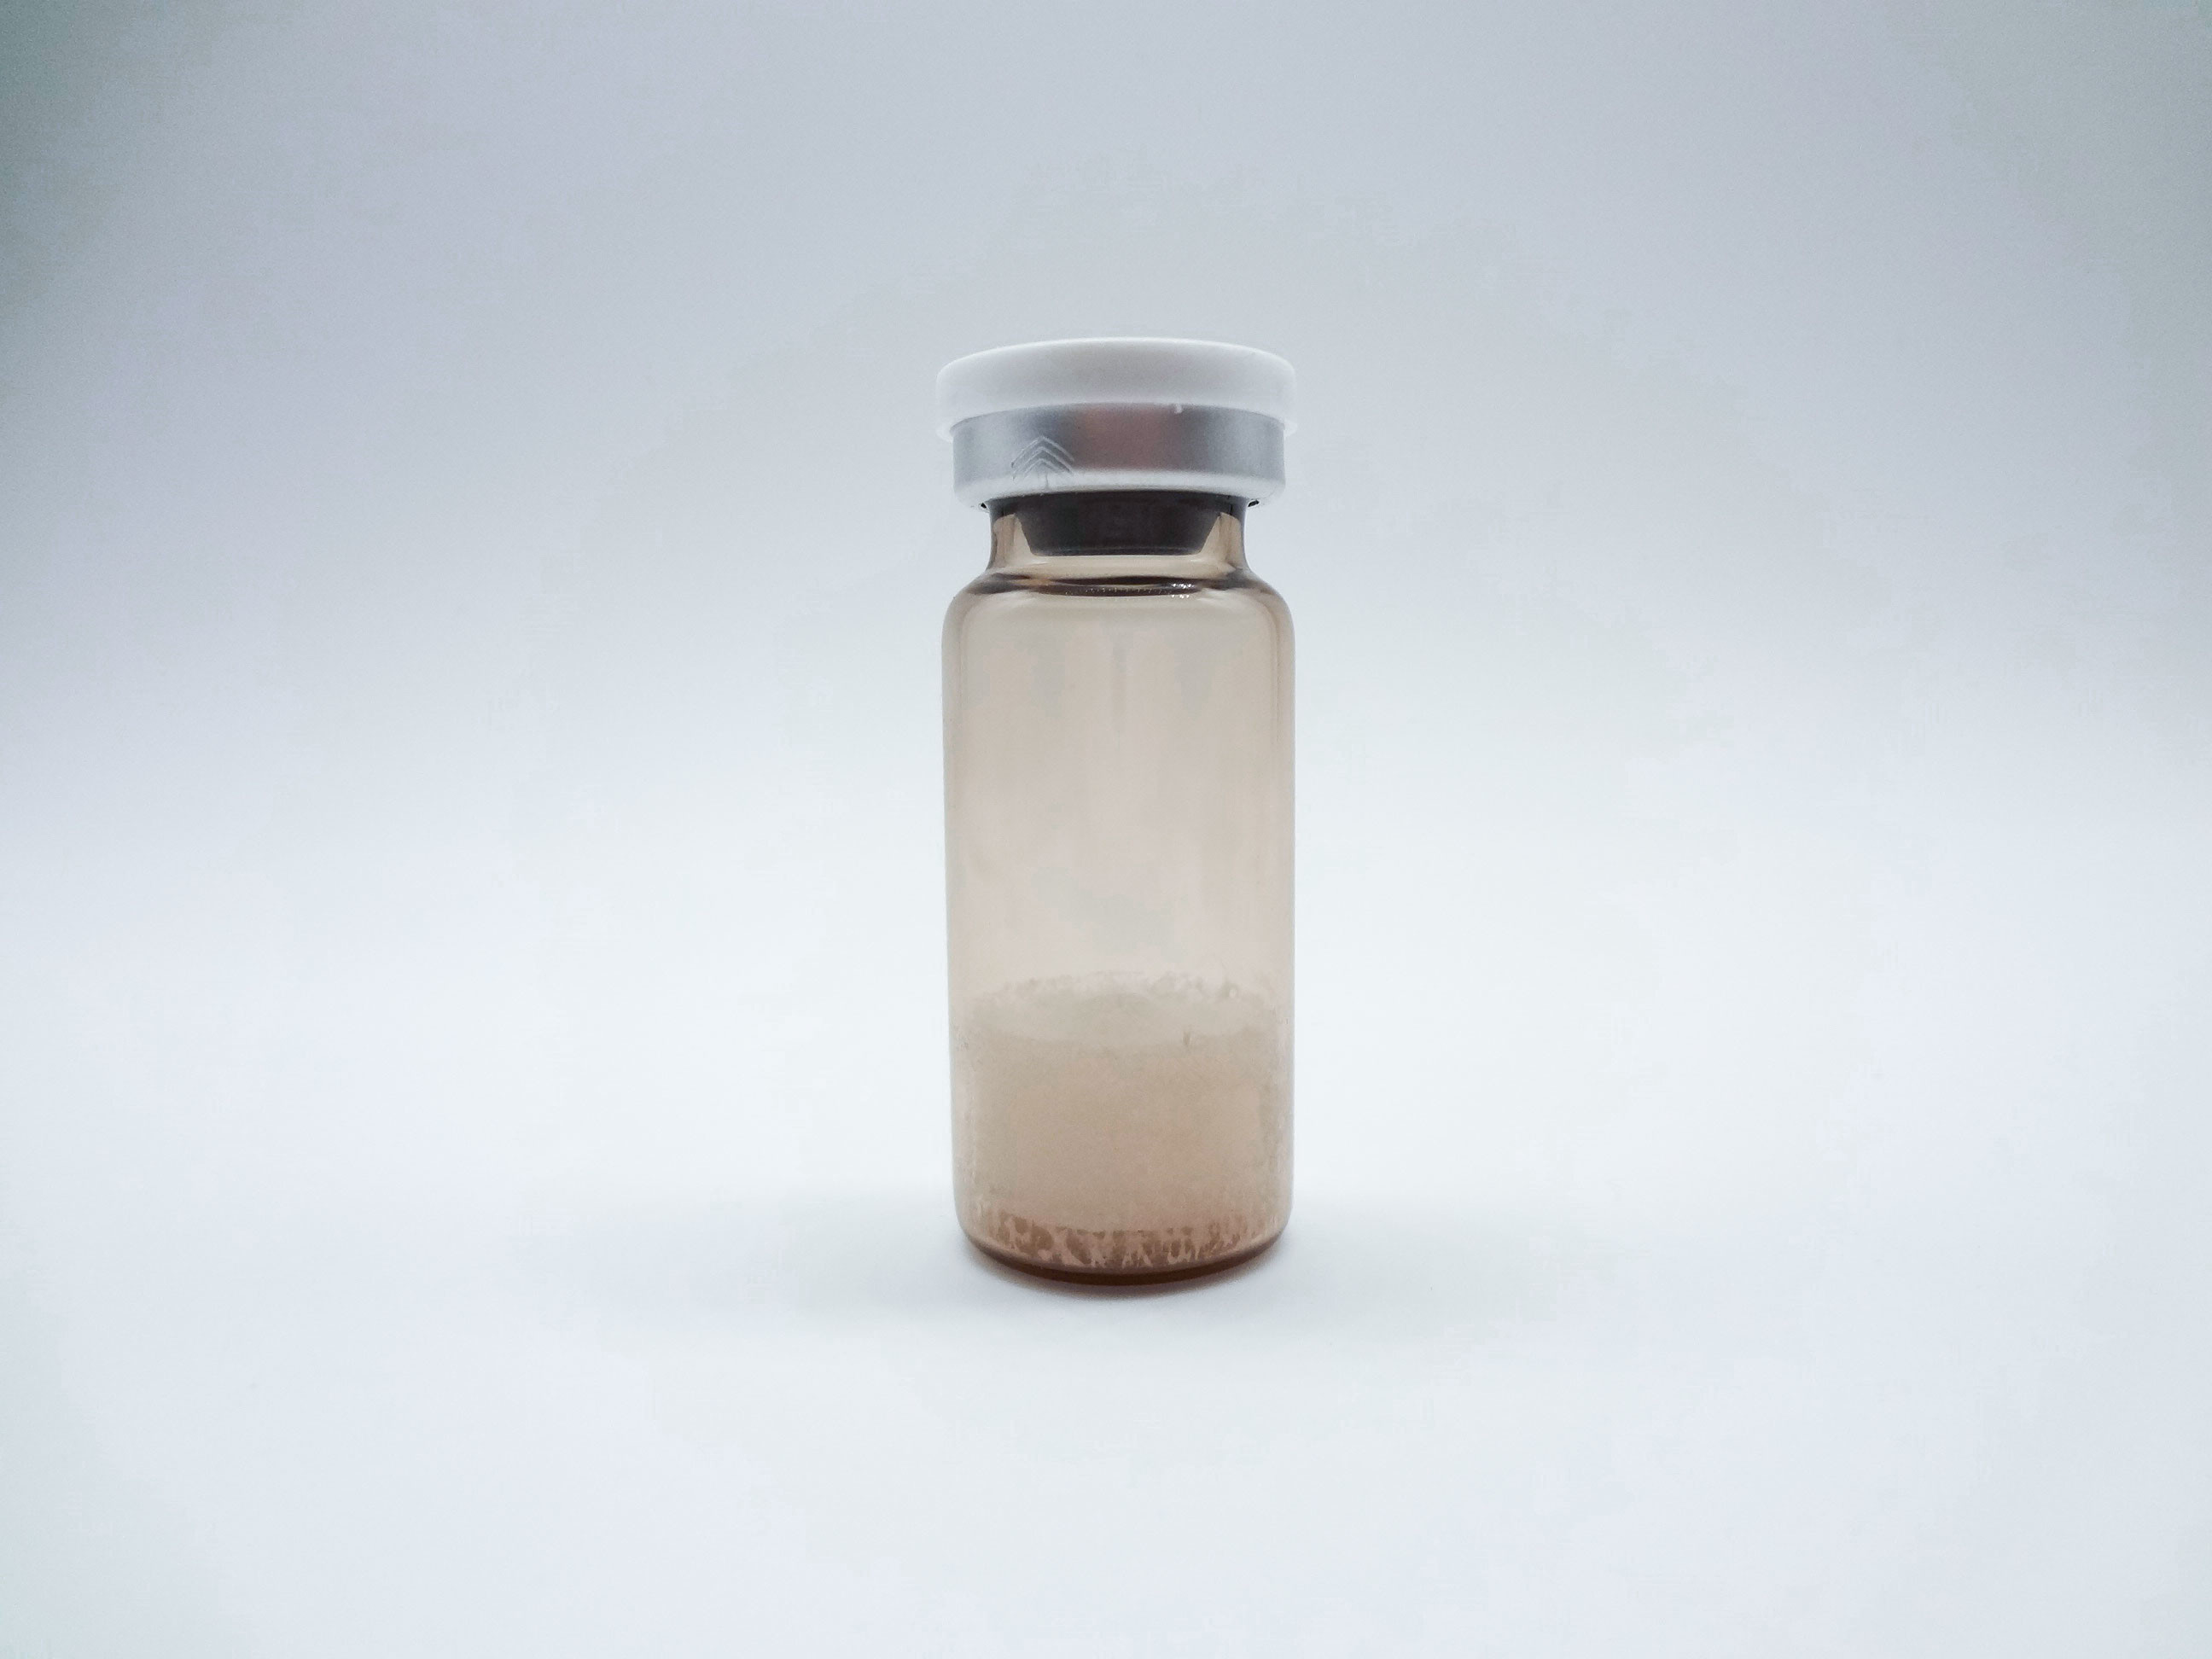 PLLA δερμικό υλικών πληρώσεως πολυ εκχύσιμο PLLA Λ πάγωμα γαλακτικού οξέος - ξηρά σκόνη